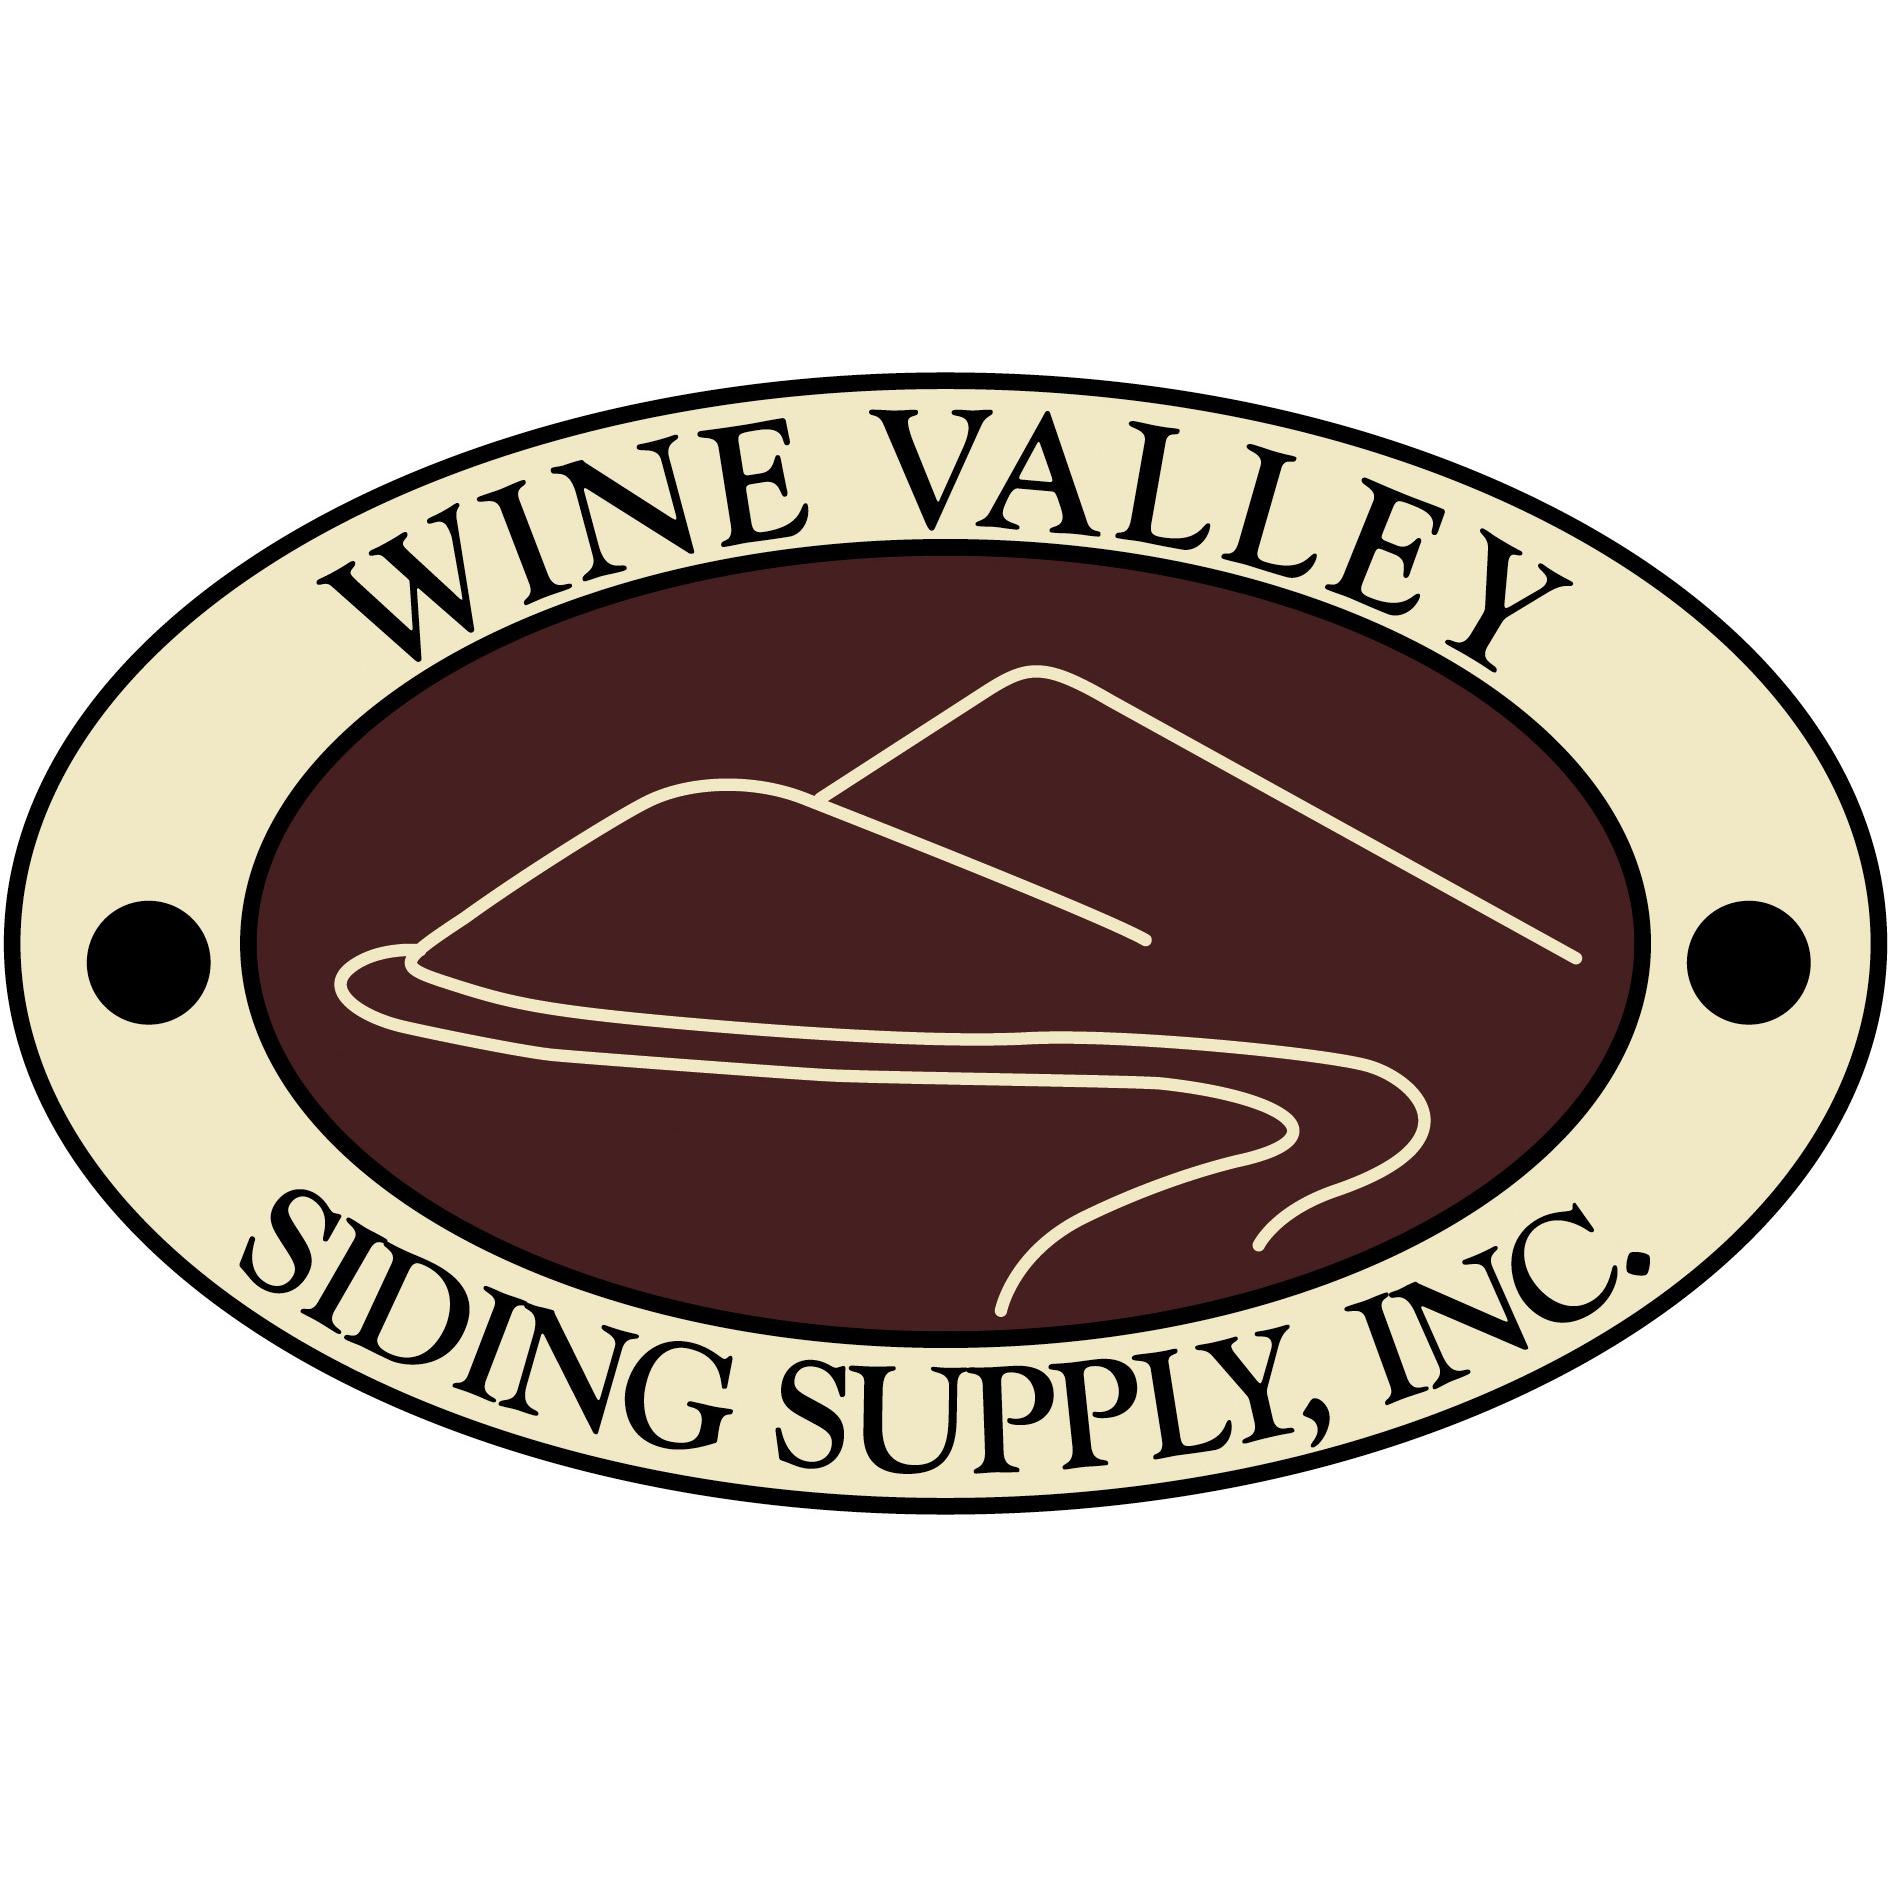 Wine Valley Siding Supply, Inc. Photo